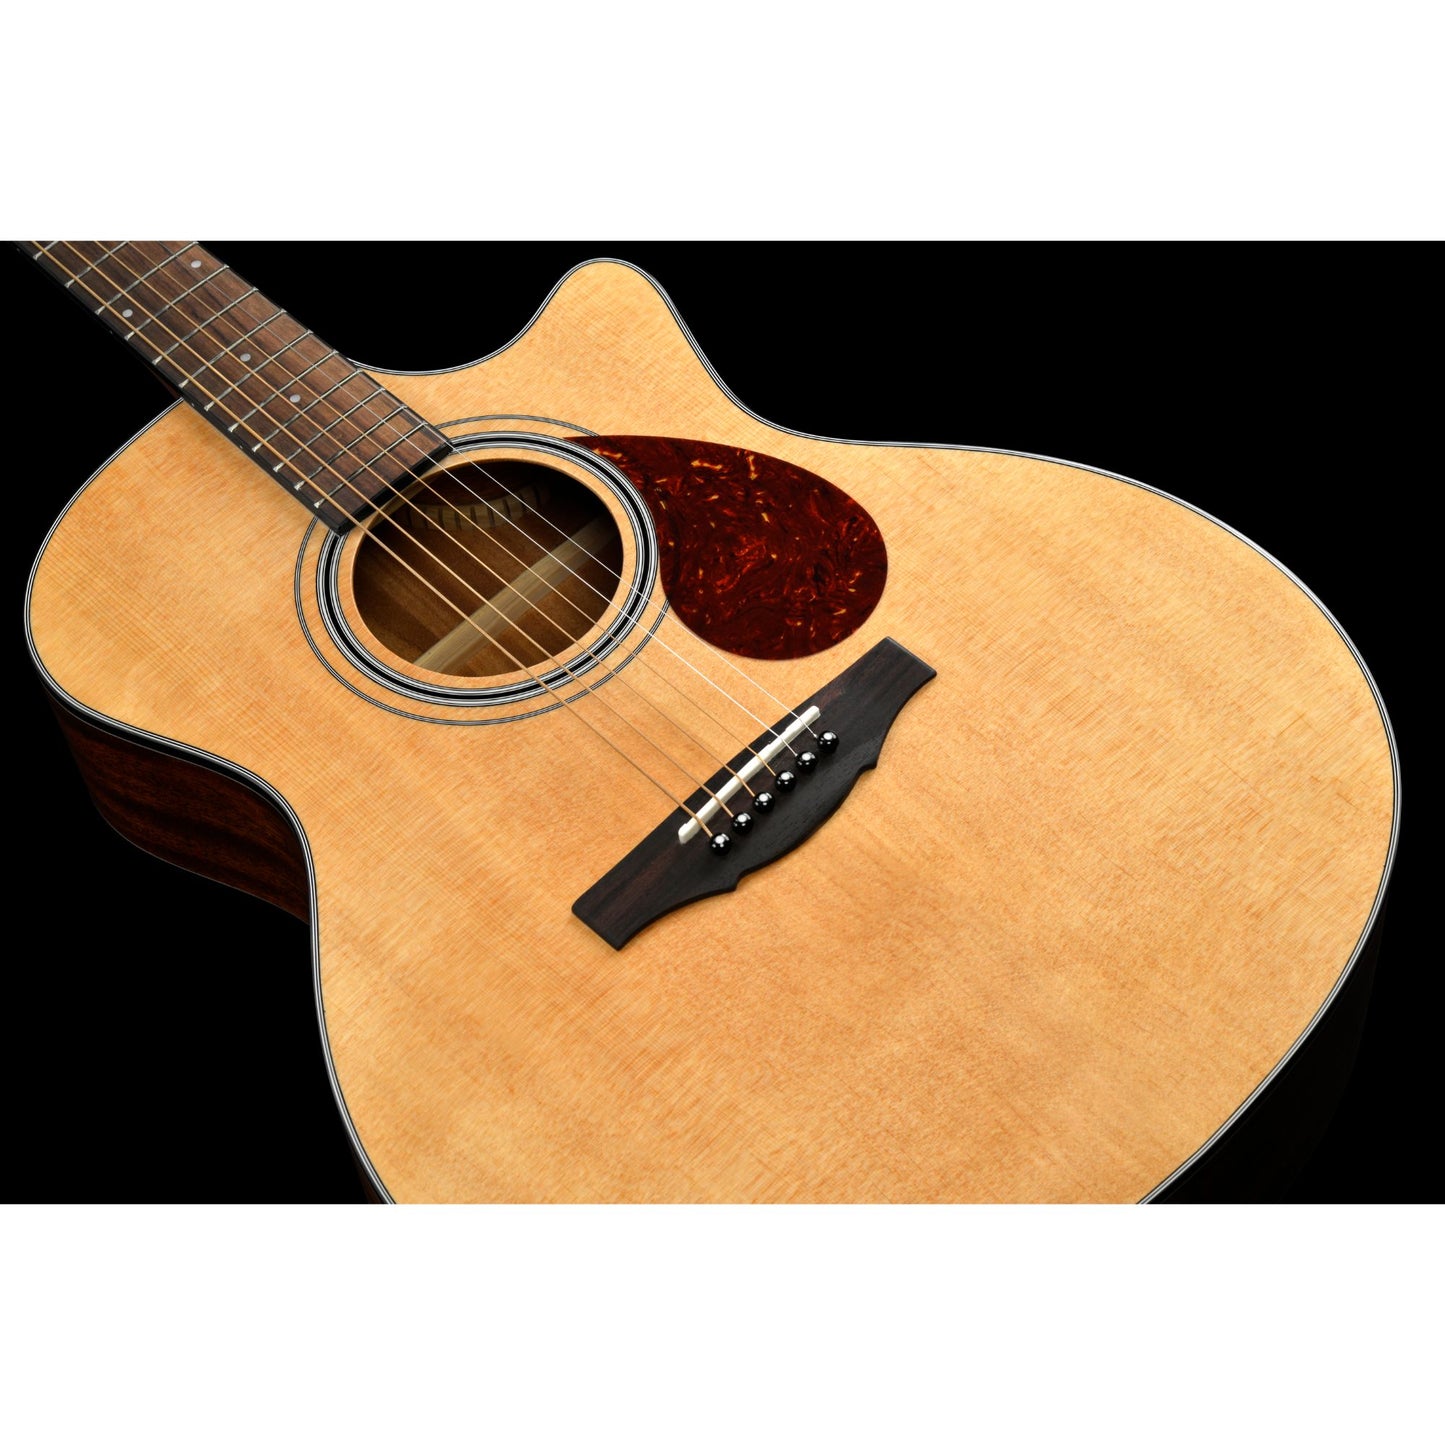 Kepma F0 GA Solid Top Acoustic Guitar- Natural